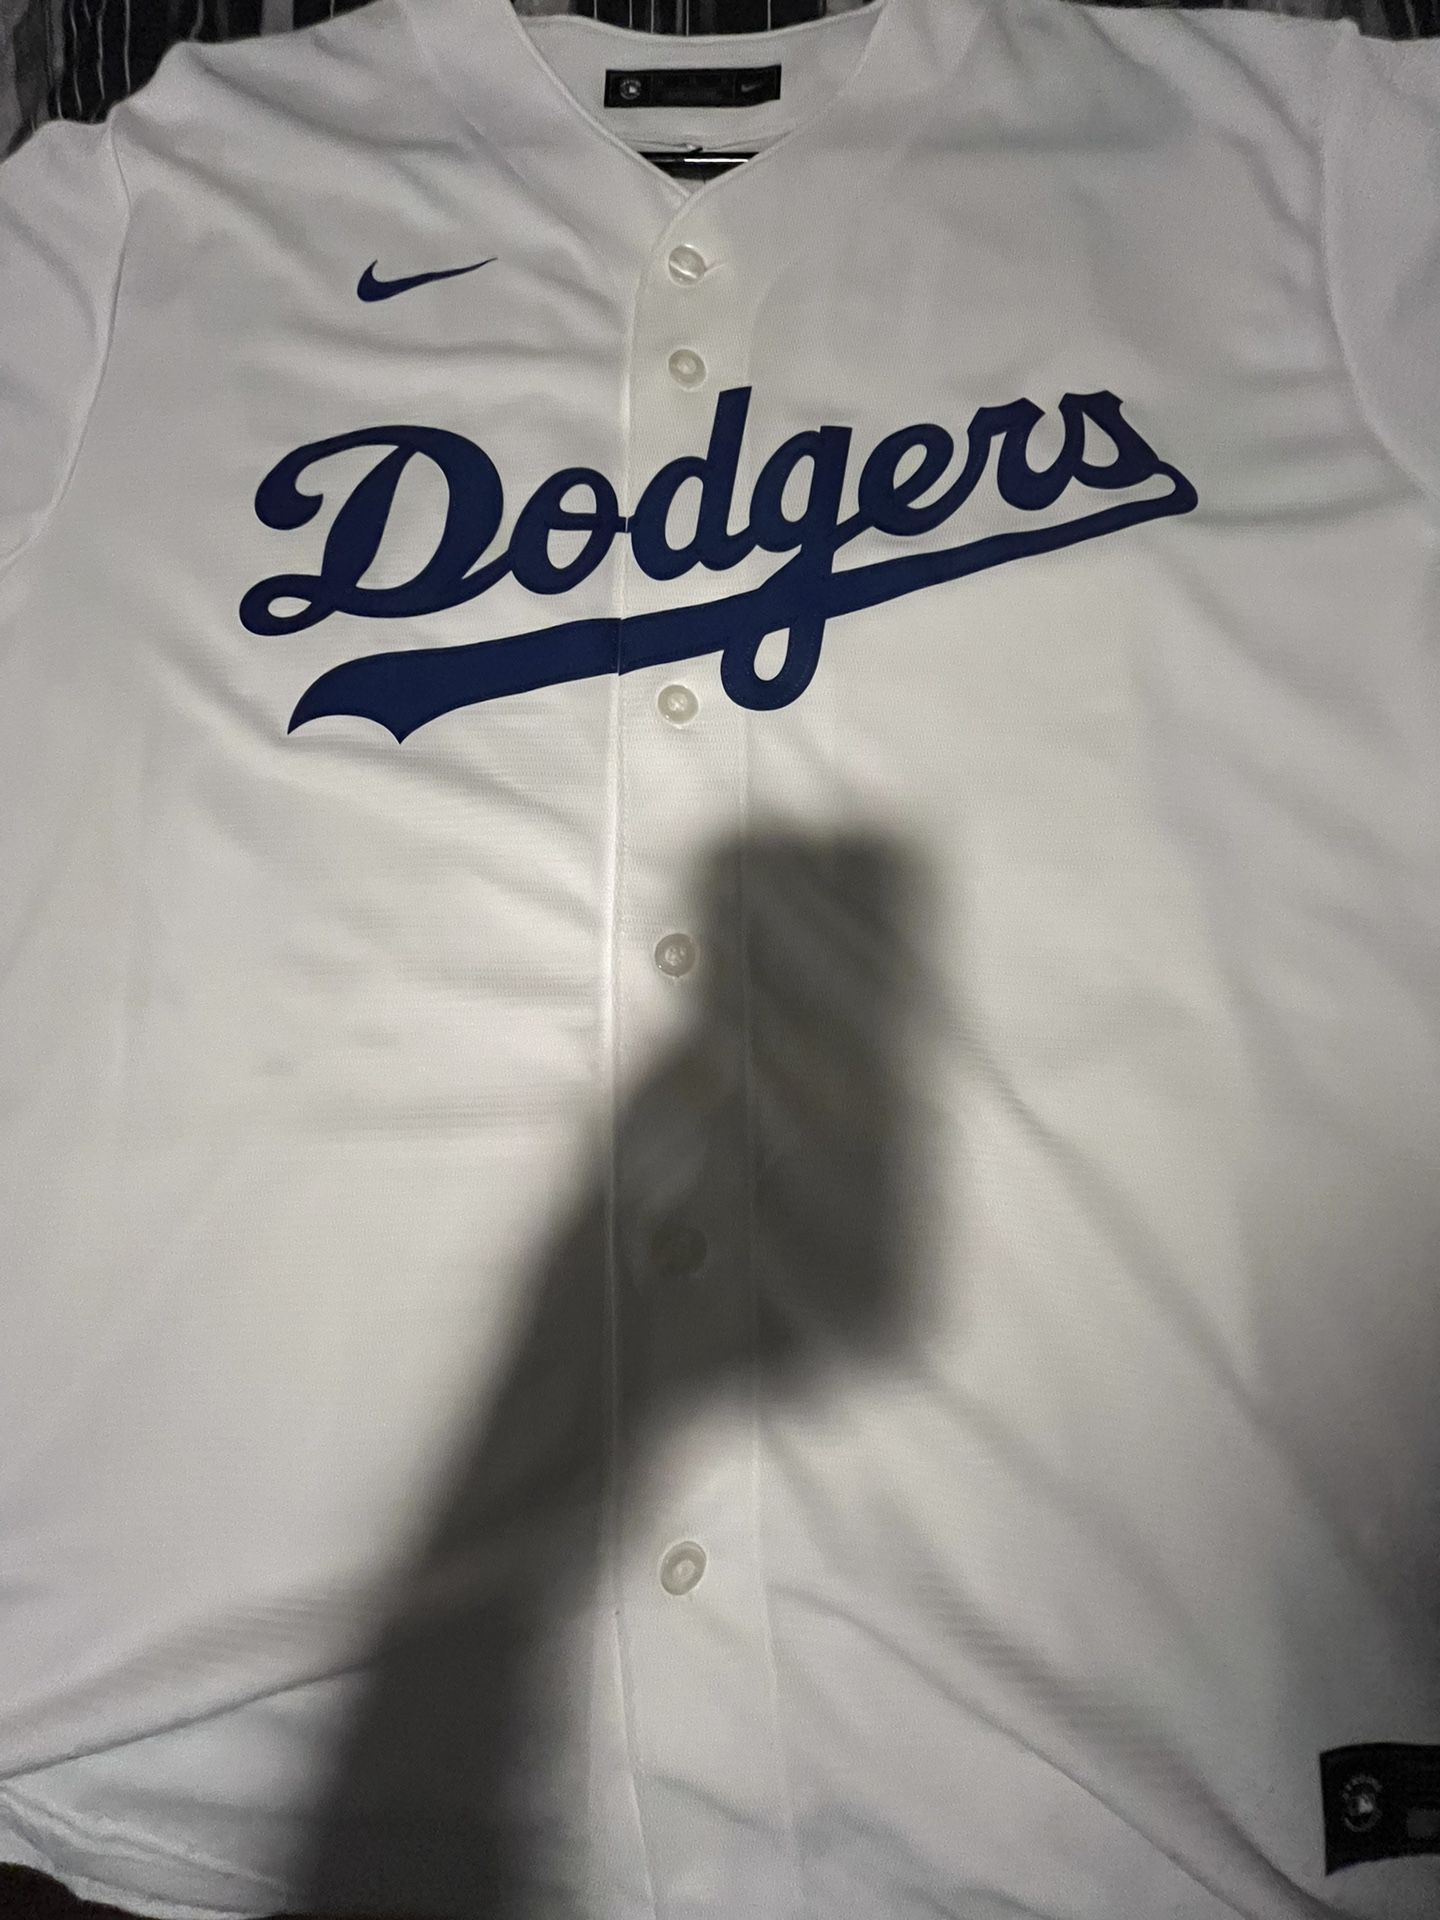 Nike Authentic Dodgers SHOHEI OHTANI Jersey